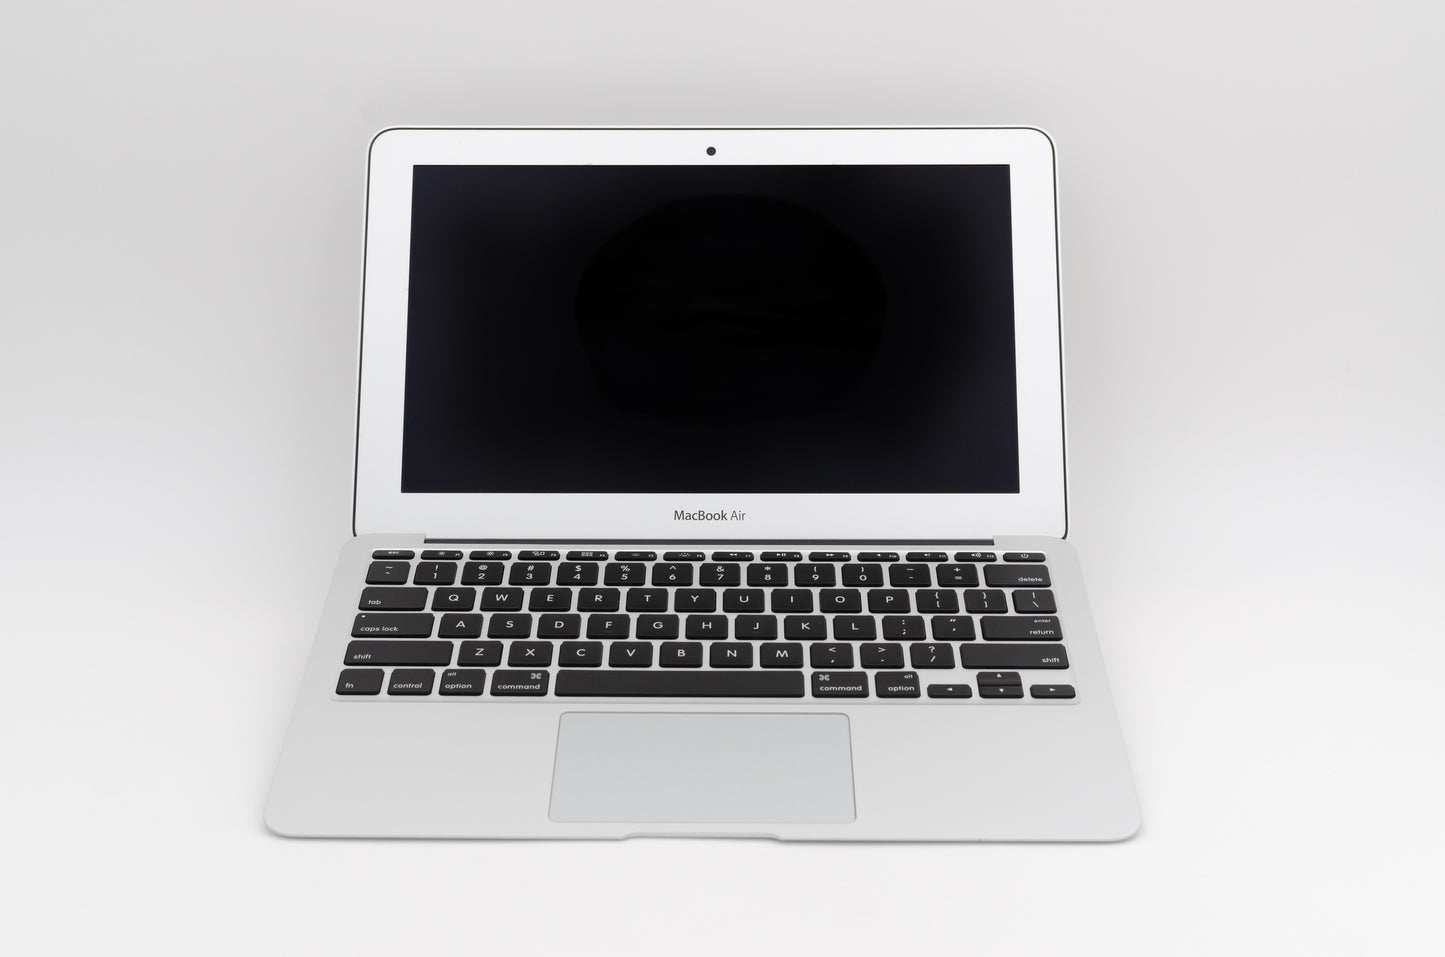 apple-mid-2011-11.6-inch-macbook-air-a1370-aluminum-dci5 - 1.6ghz processor, 2gb ram, hd 3000 - 348mb gpu-mc968ll/a-2